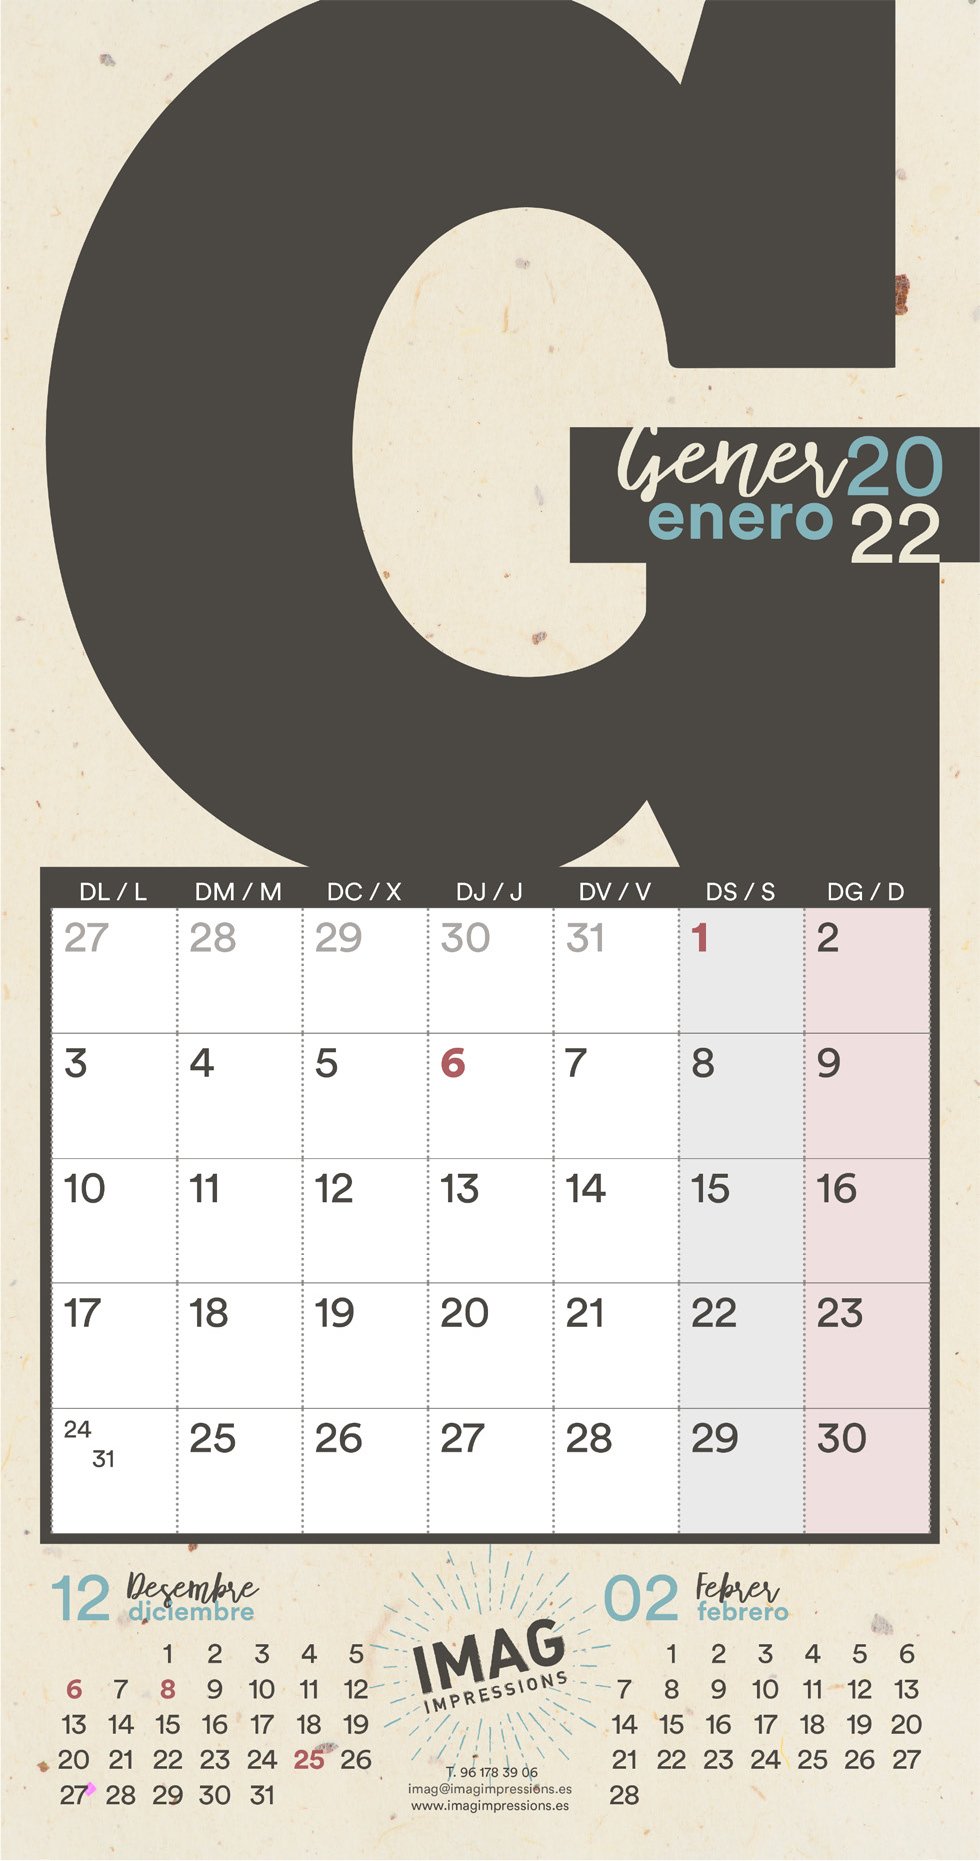 Calendari Imag Impressions 2022 gener